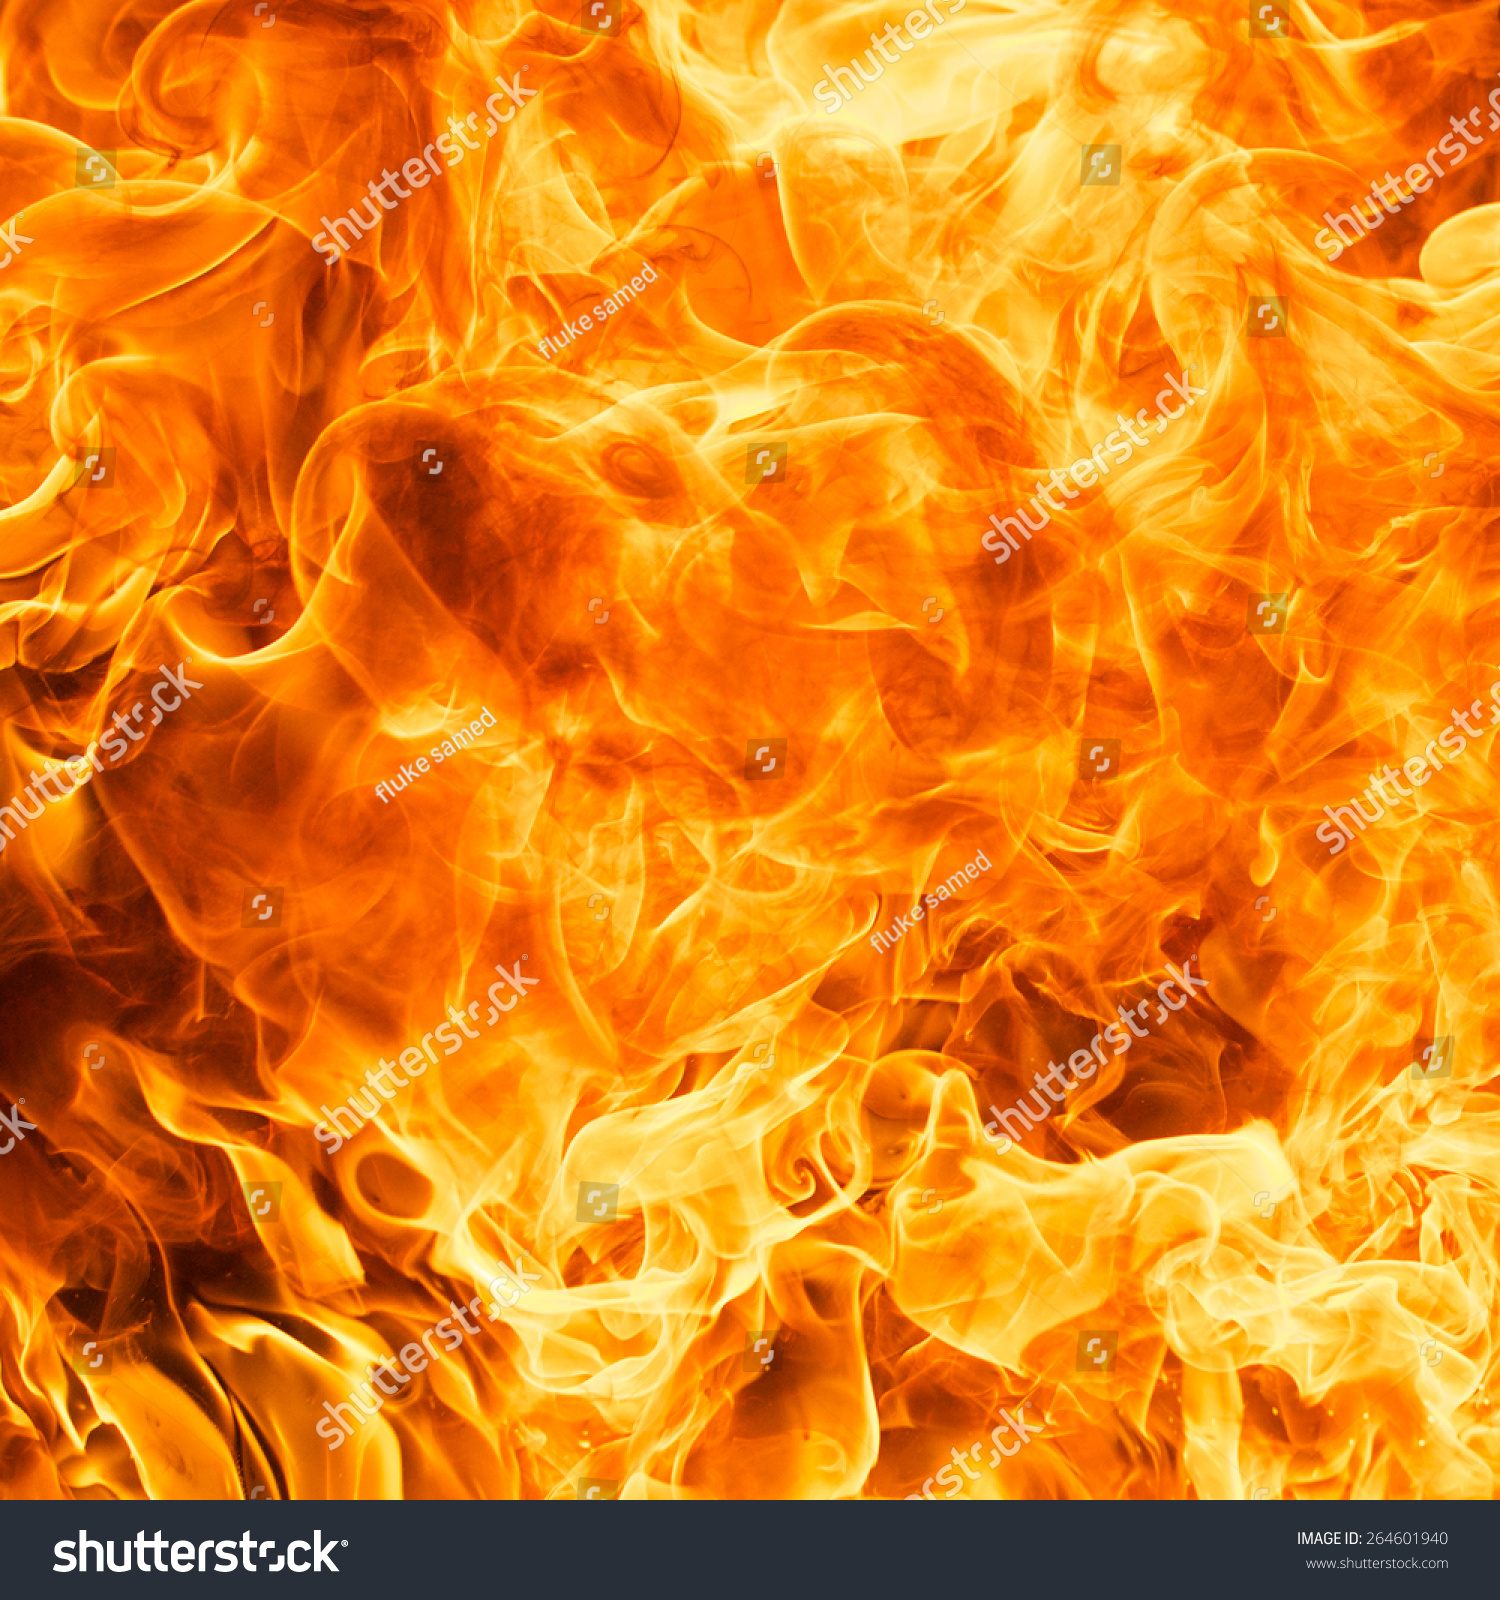 blaze fire flame texture background #264601940